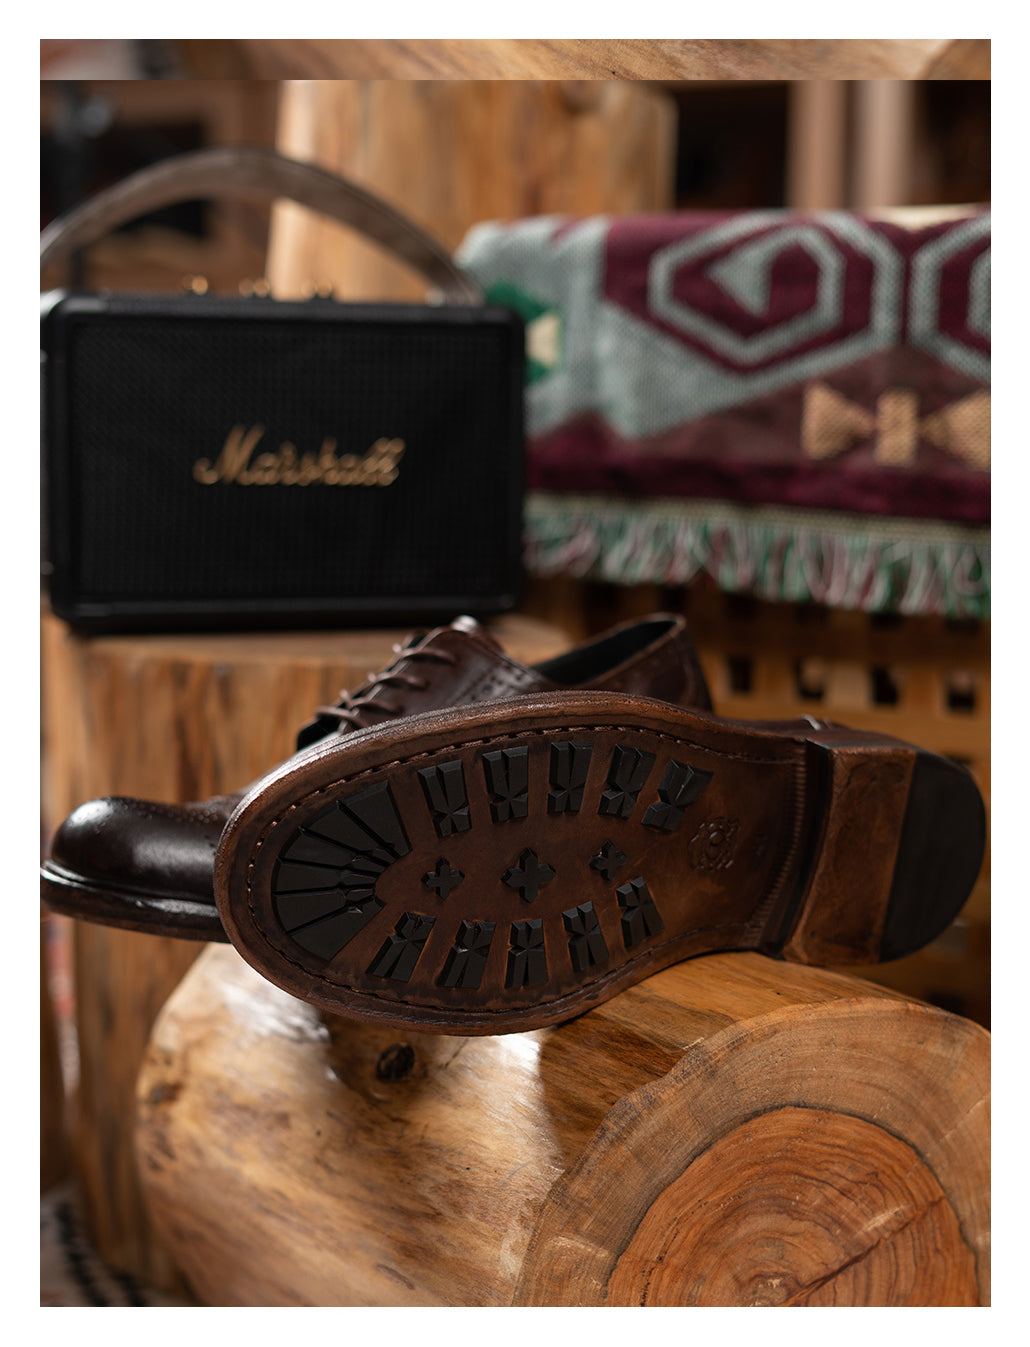 Men's Leather Brogue Derby Shoes